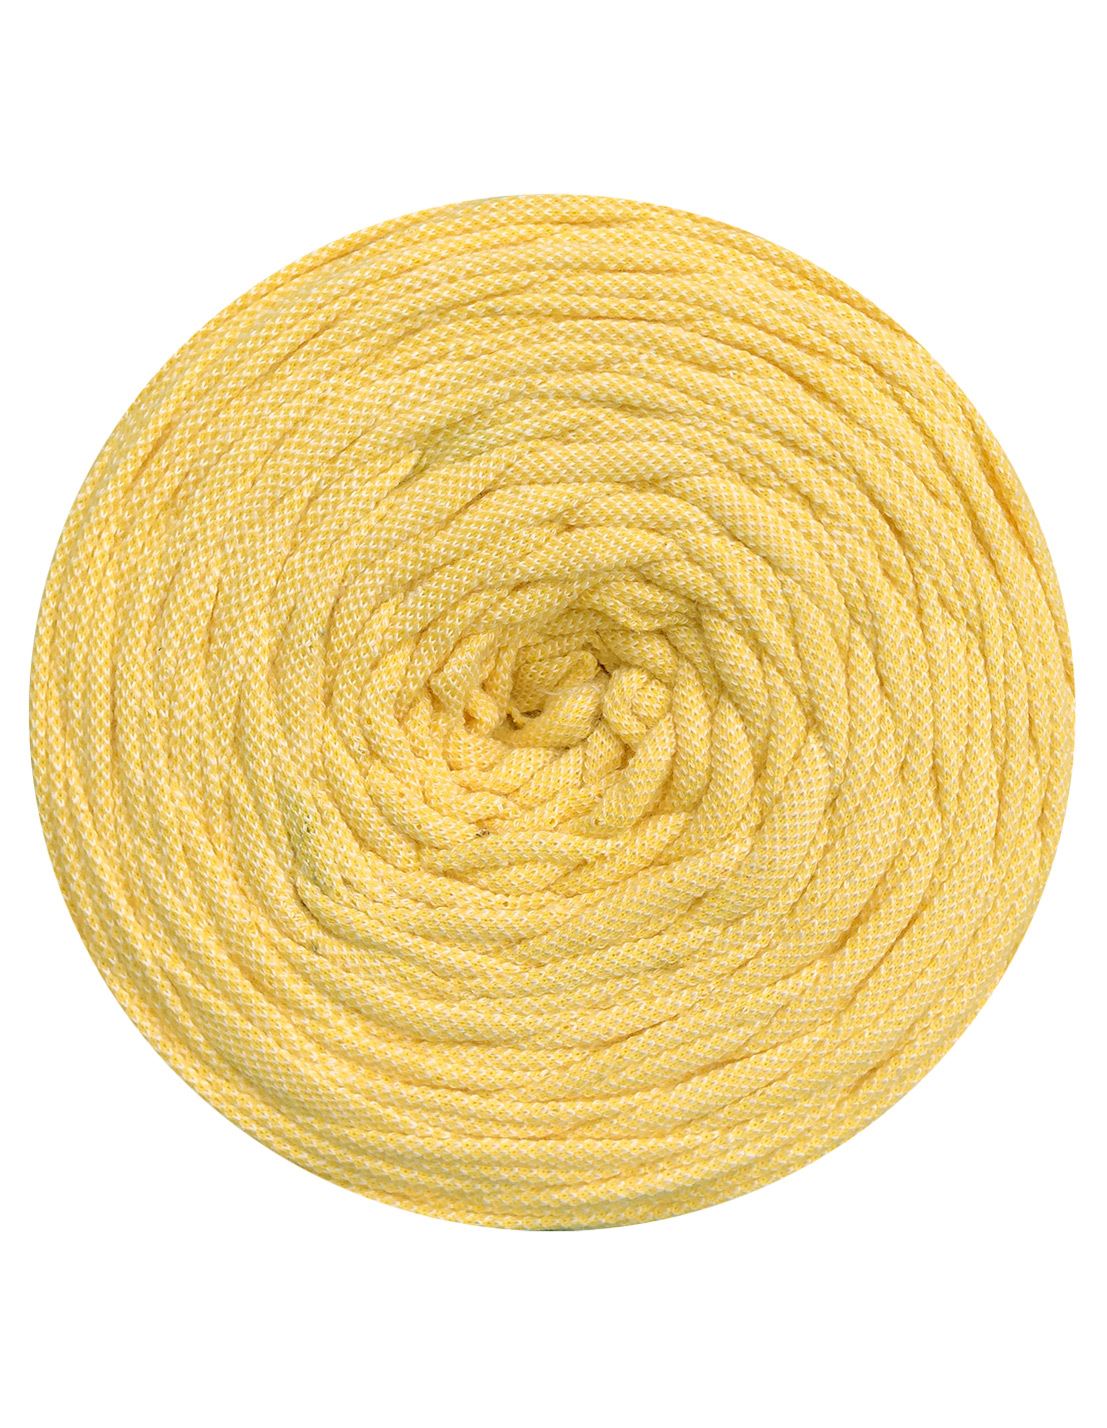 Pale yellow polo t-shirt yarn by Rescue Yarn (100-120m)